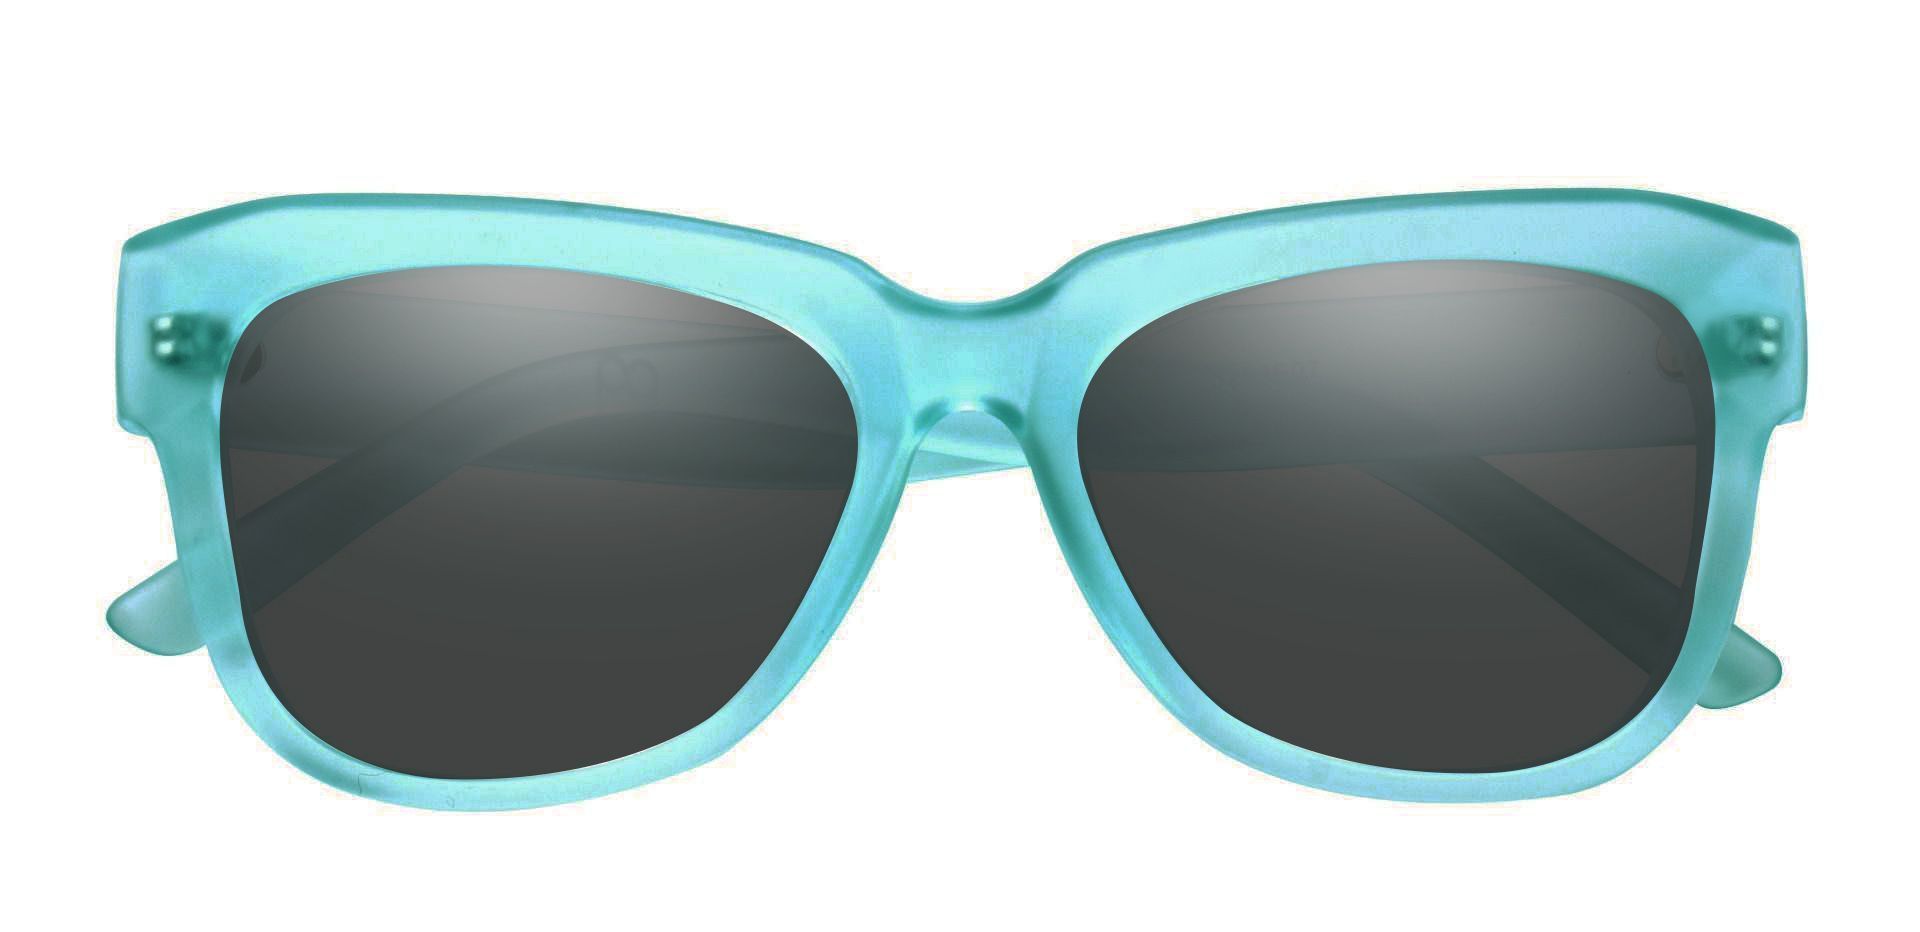 Gina Cat-Eye Reading Sunglasses - Blue Frame With Gray Lenses